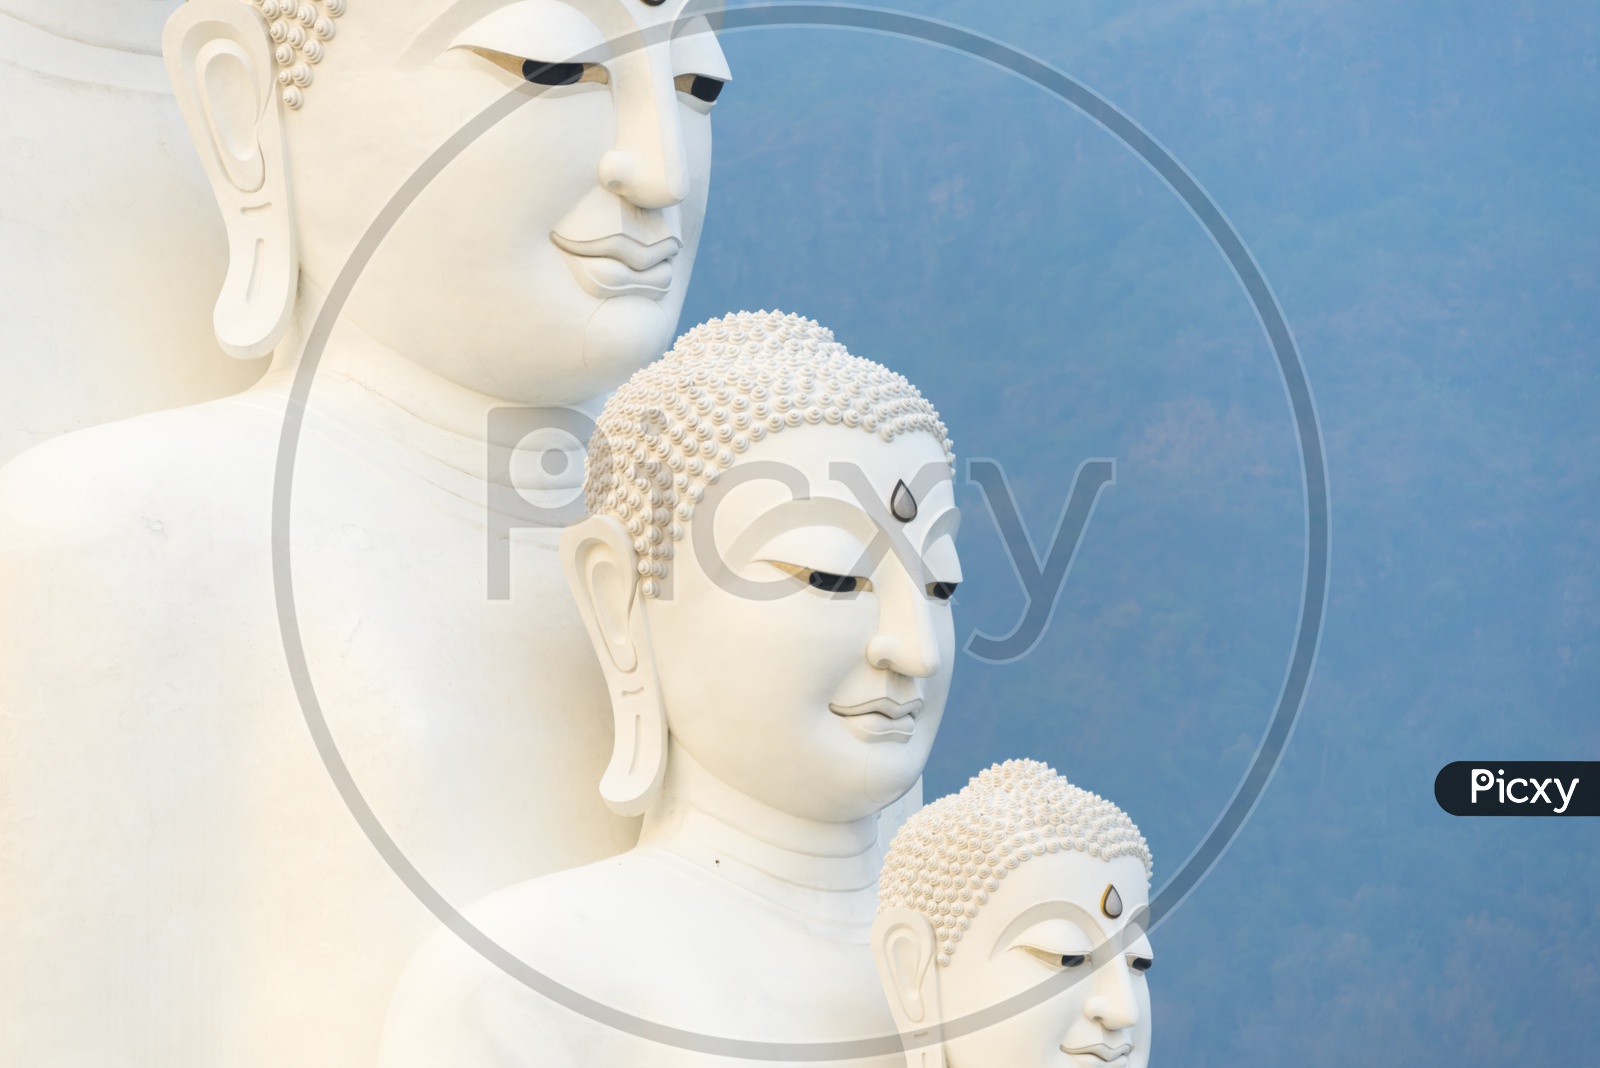 Five Buddha statue in Wat Pha Sorn Kaew temple, Thailand